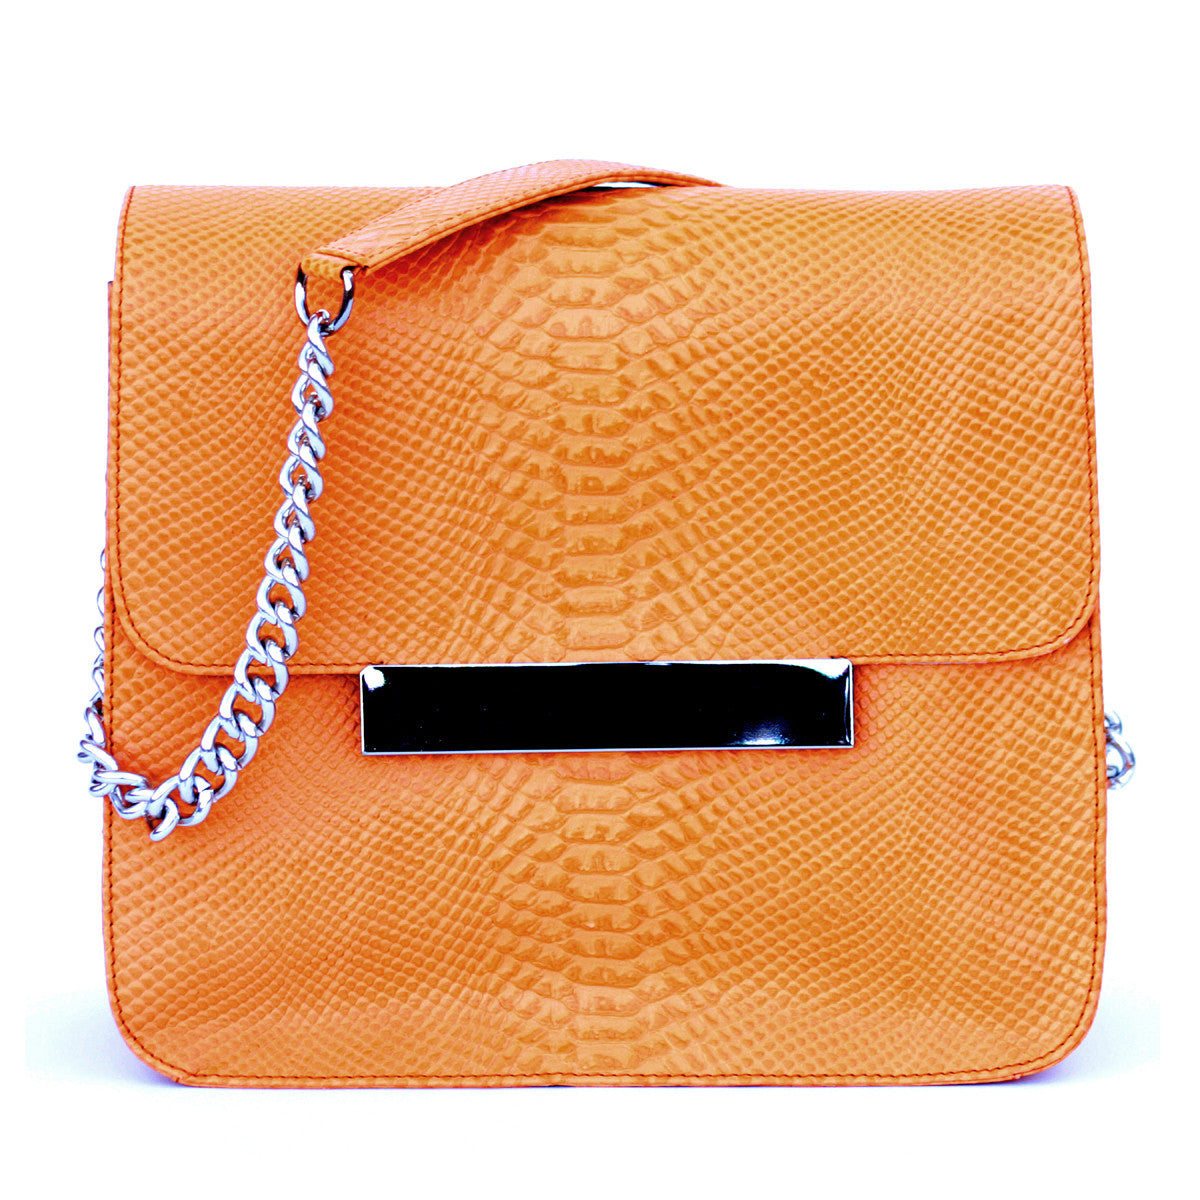 Glass Handbag Frankie Crossbody Handbag in Burnt Orange snake stamped leather